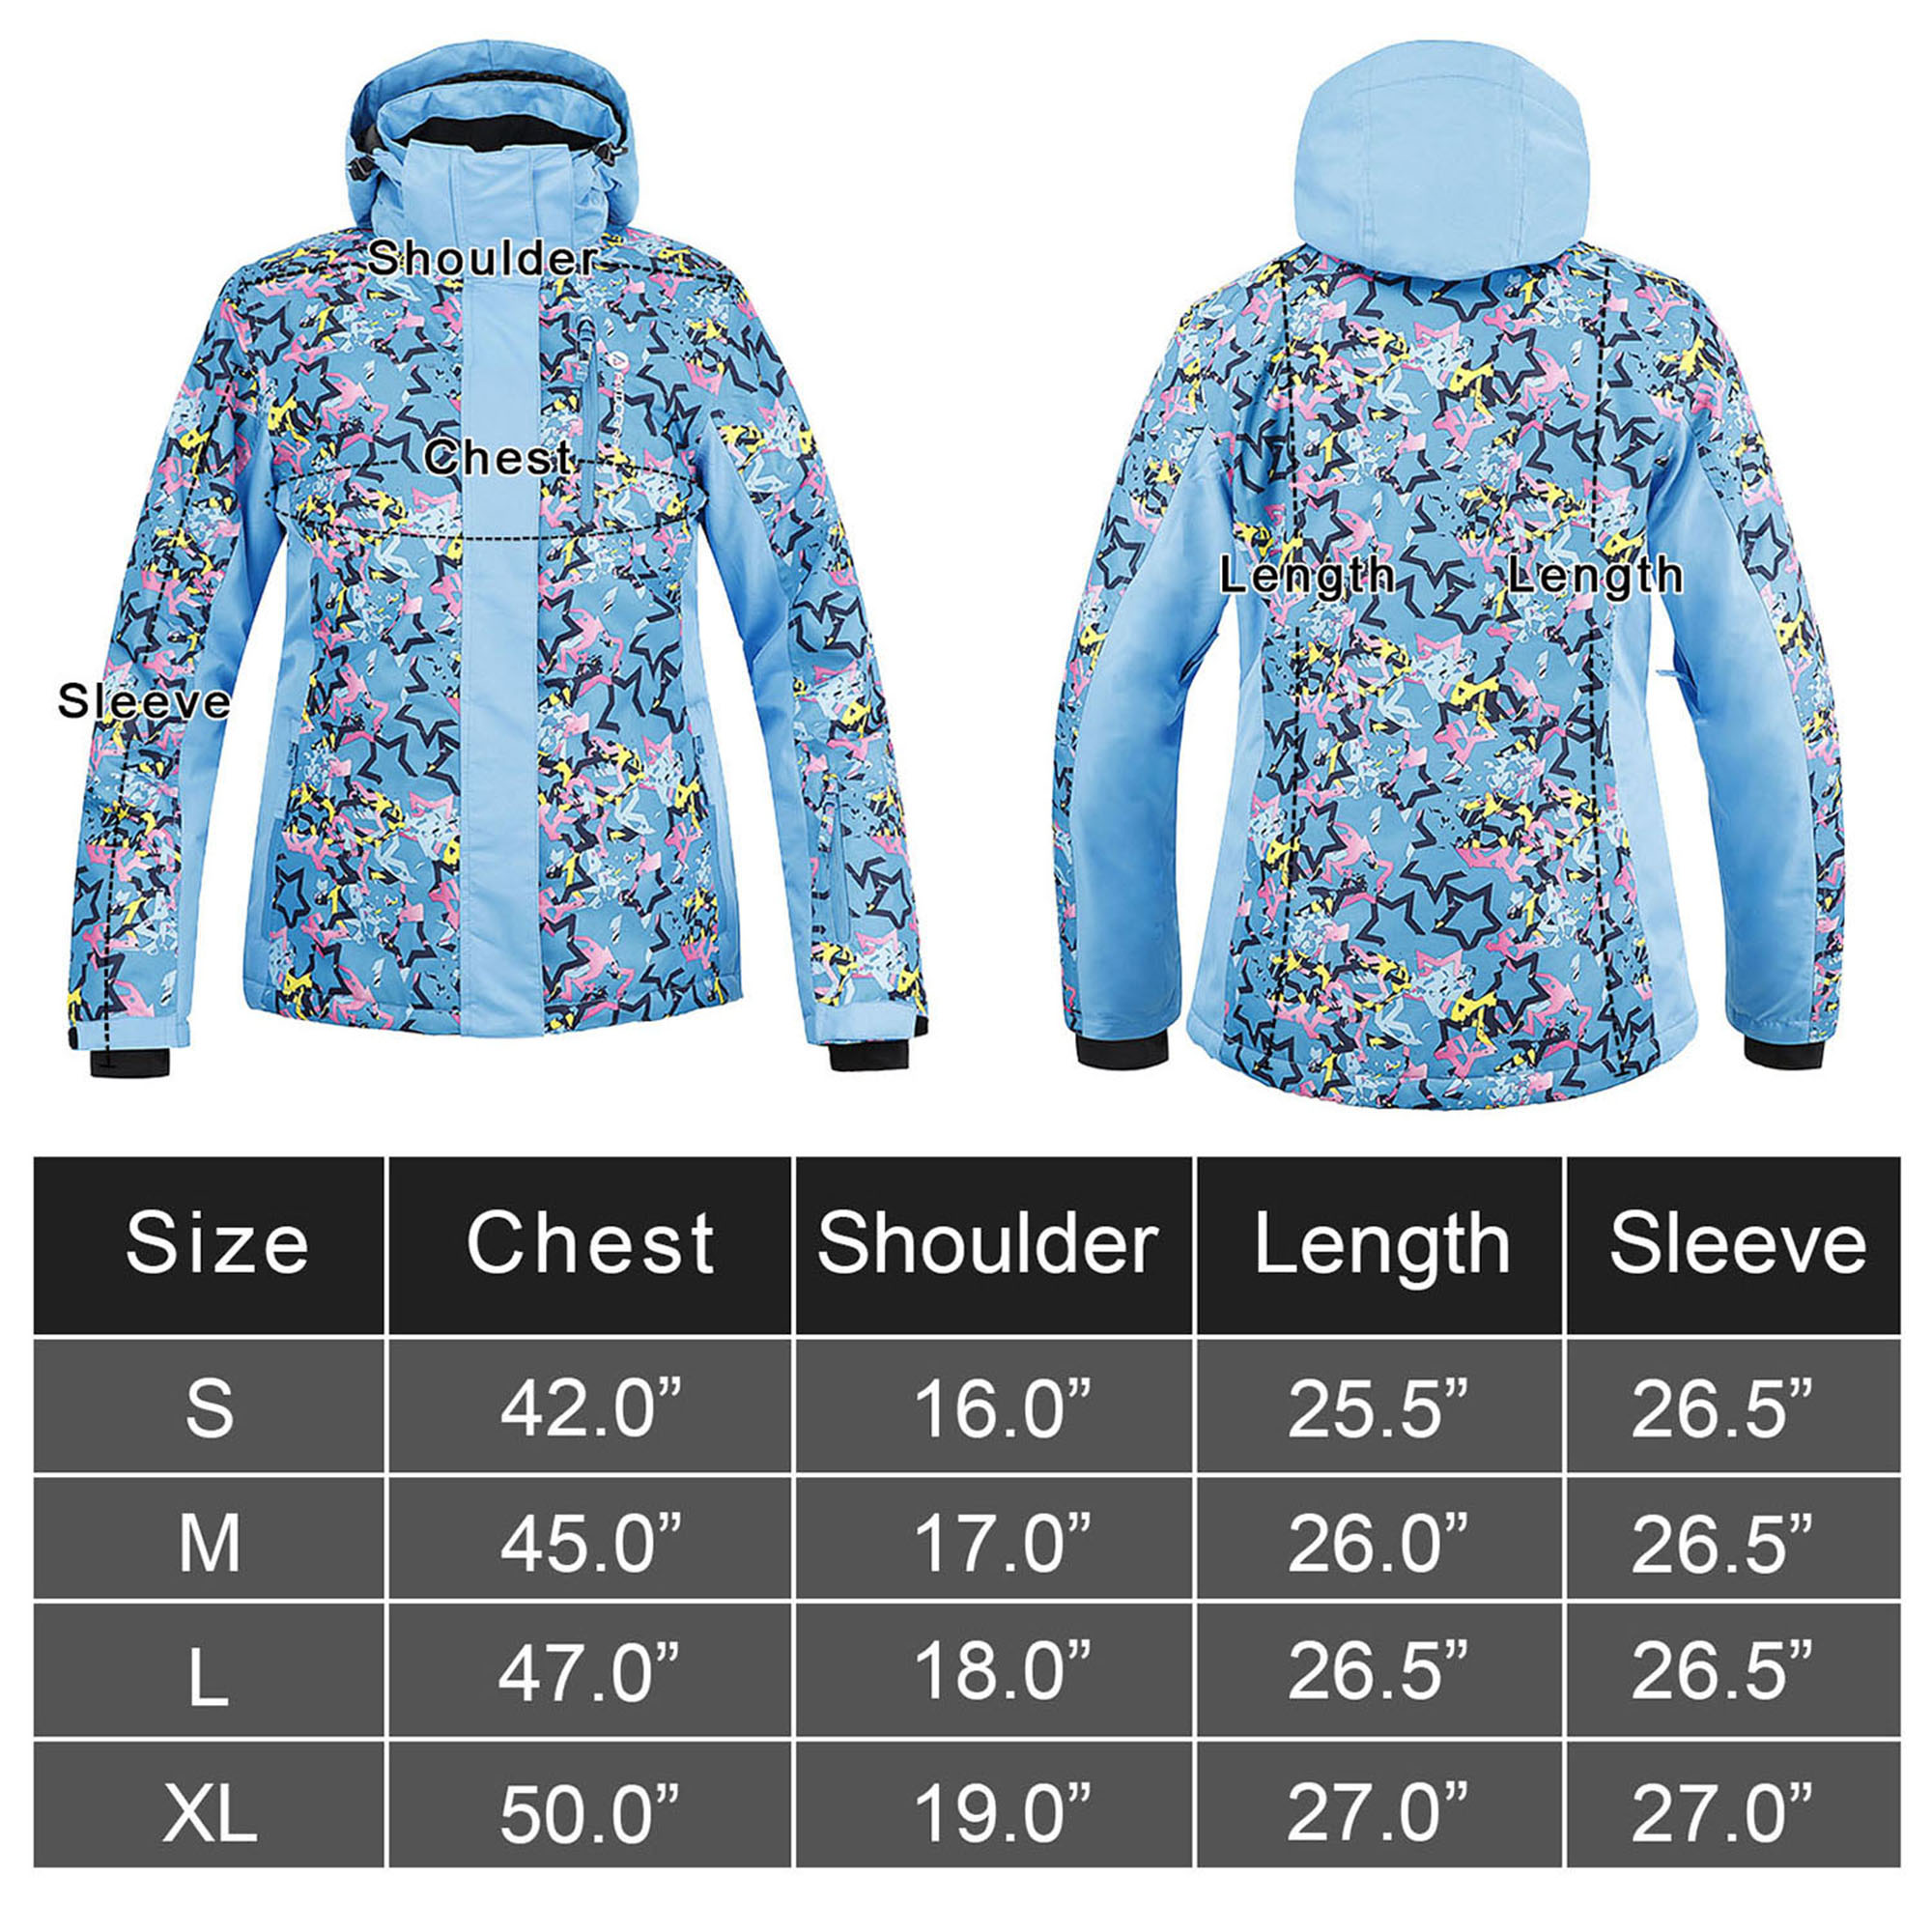 Simplicity Women's Winter Ski Jacket with Zip-Off Hood,Retro Blue Starbursts,M - image 4 of 4